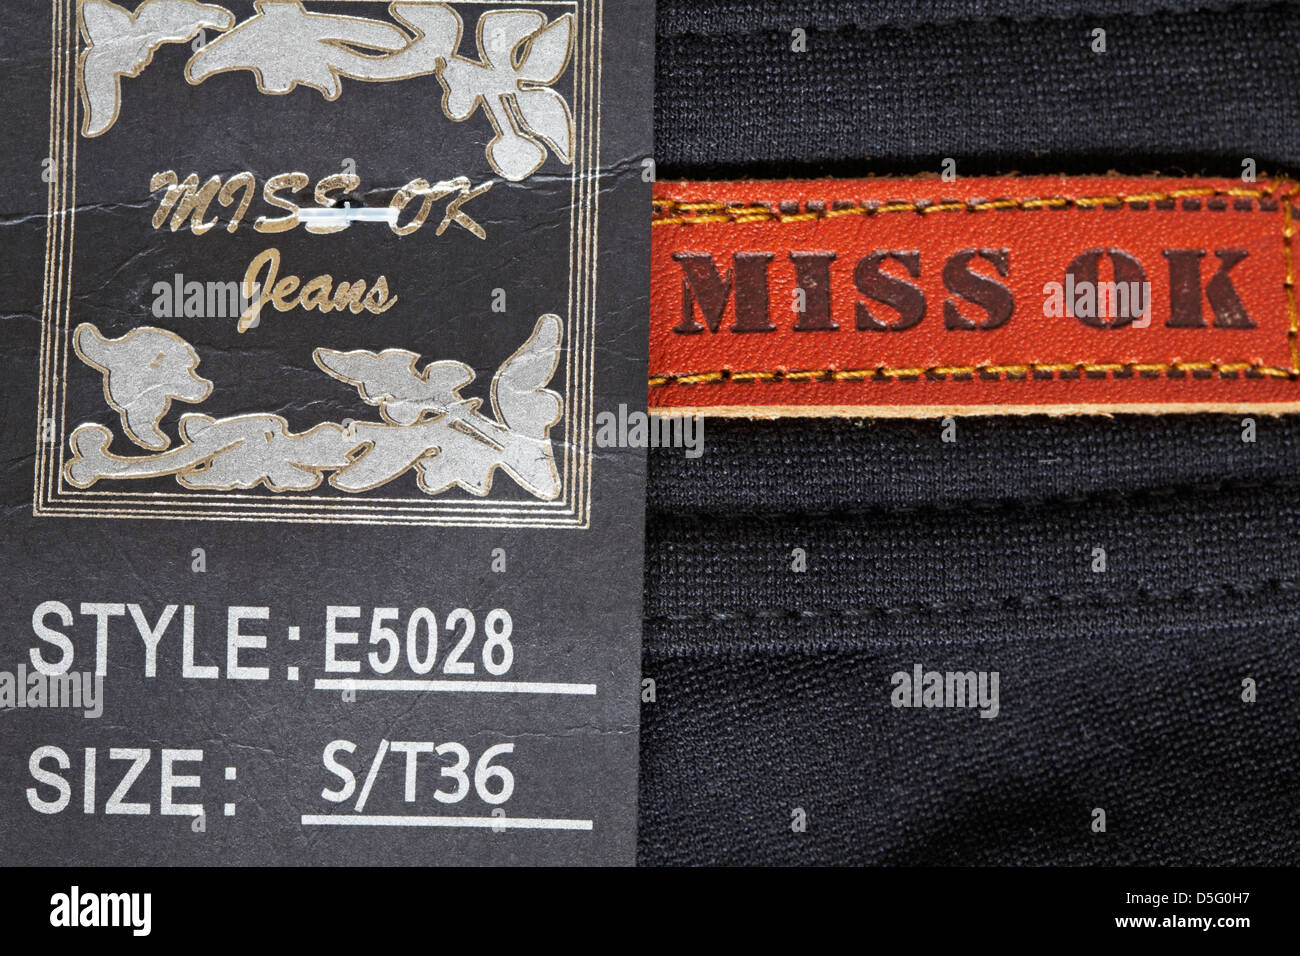 Miss jeans label Stock Photo - Alamy